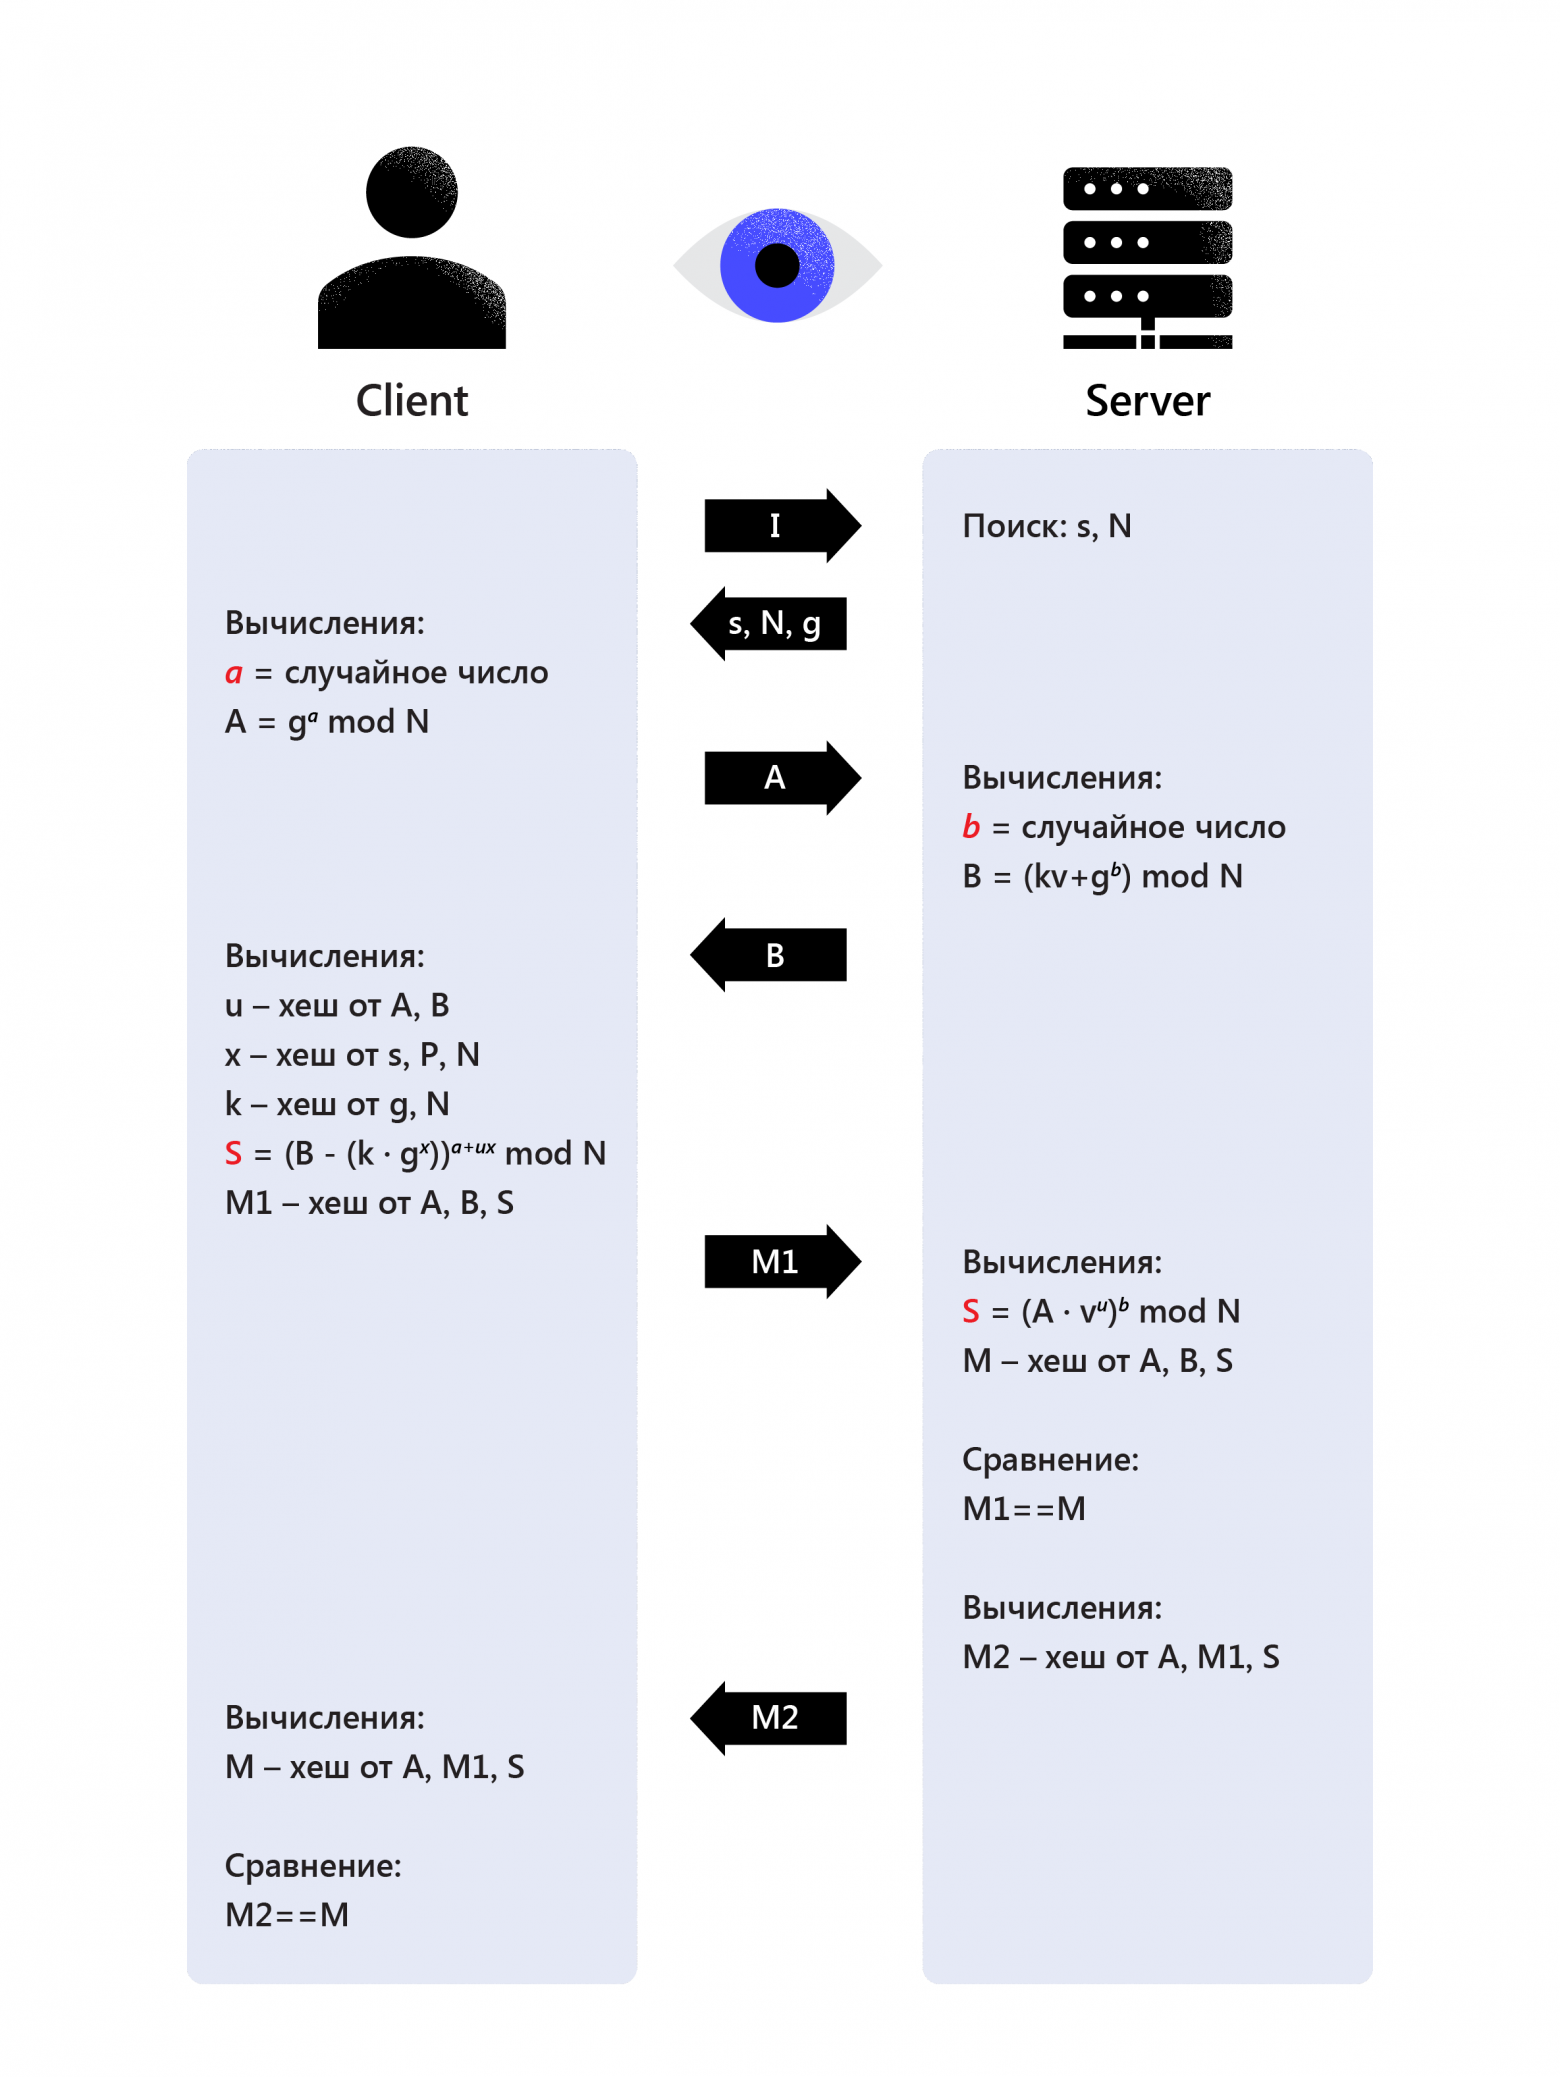 Схема аутентификации по протоколу SRP на сервере ProtonMail